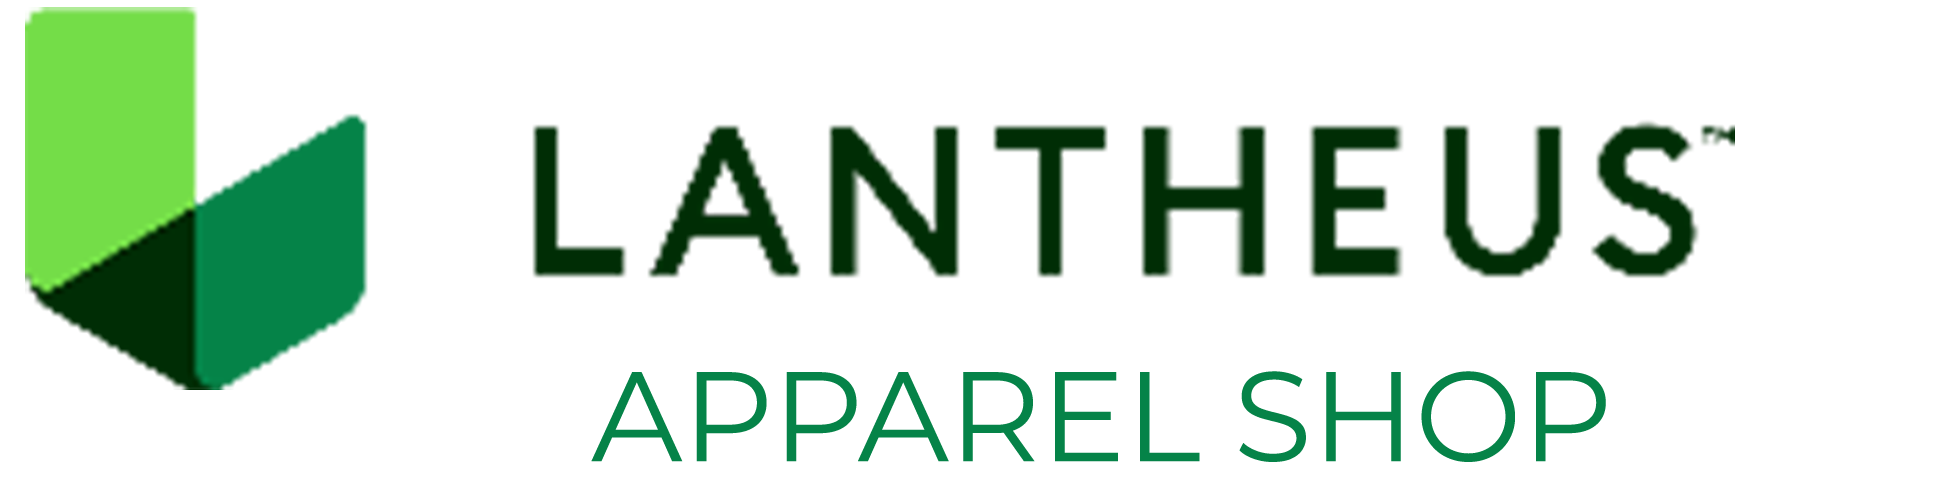 Lantheus Apparel Shop